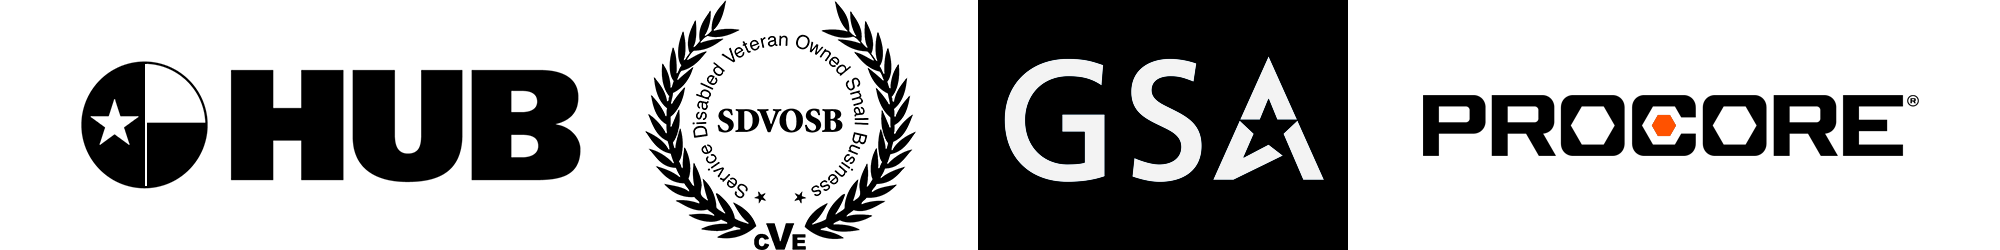 Hub-sdvosb-GSA-procure Logos